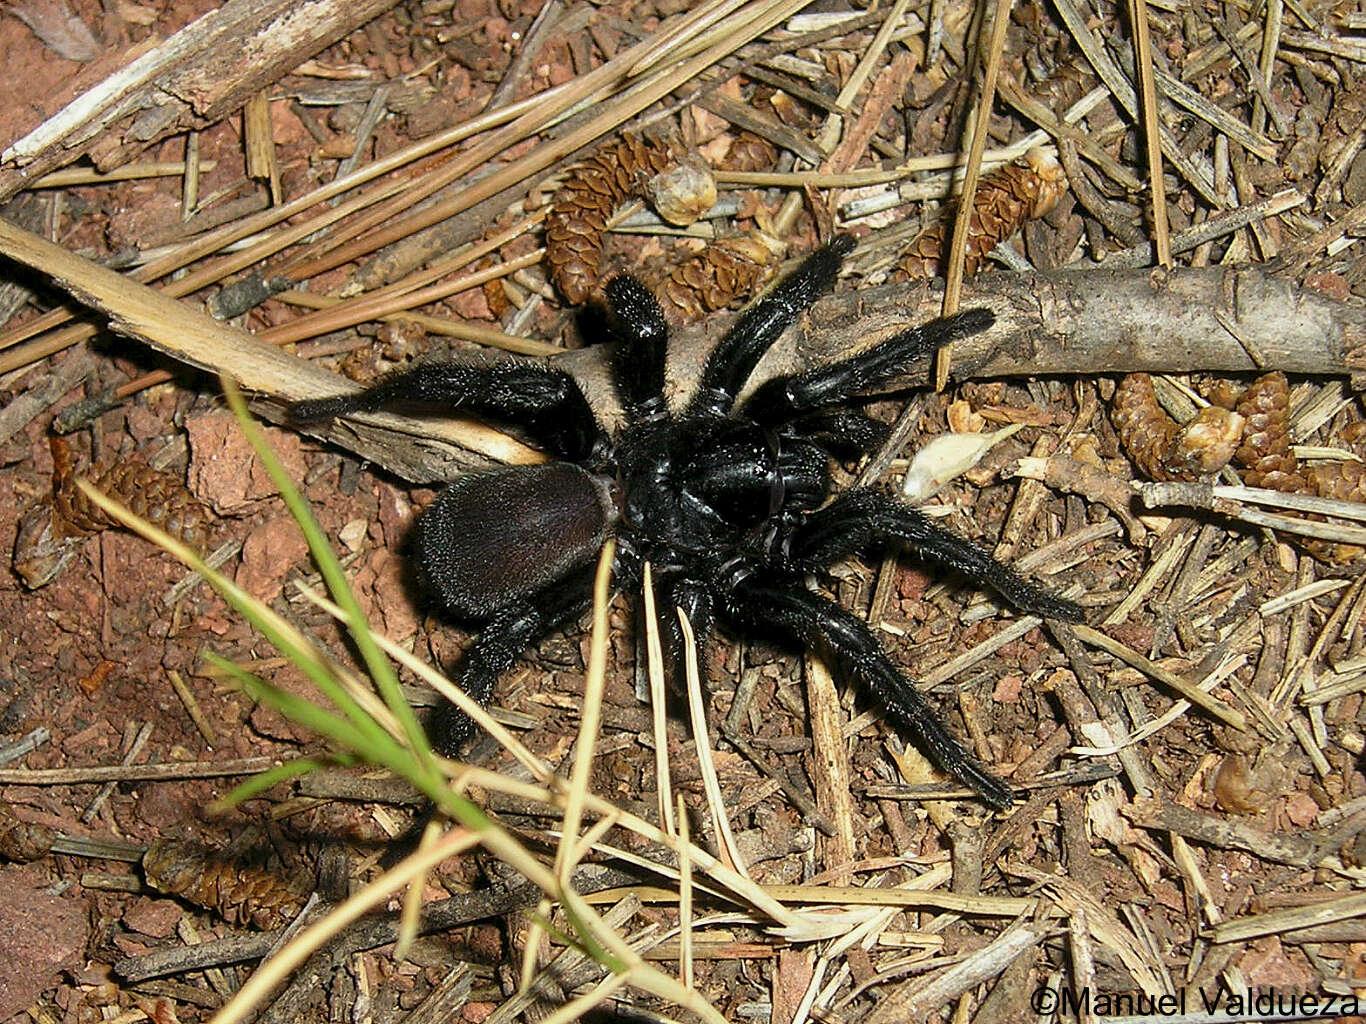 Image of wafer trapdoor spiders